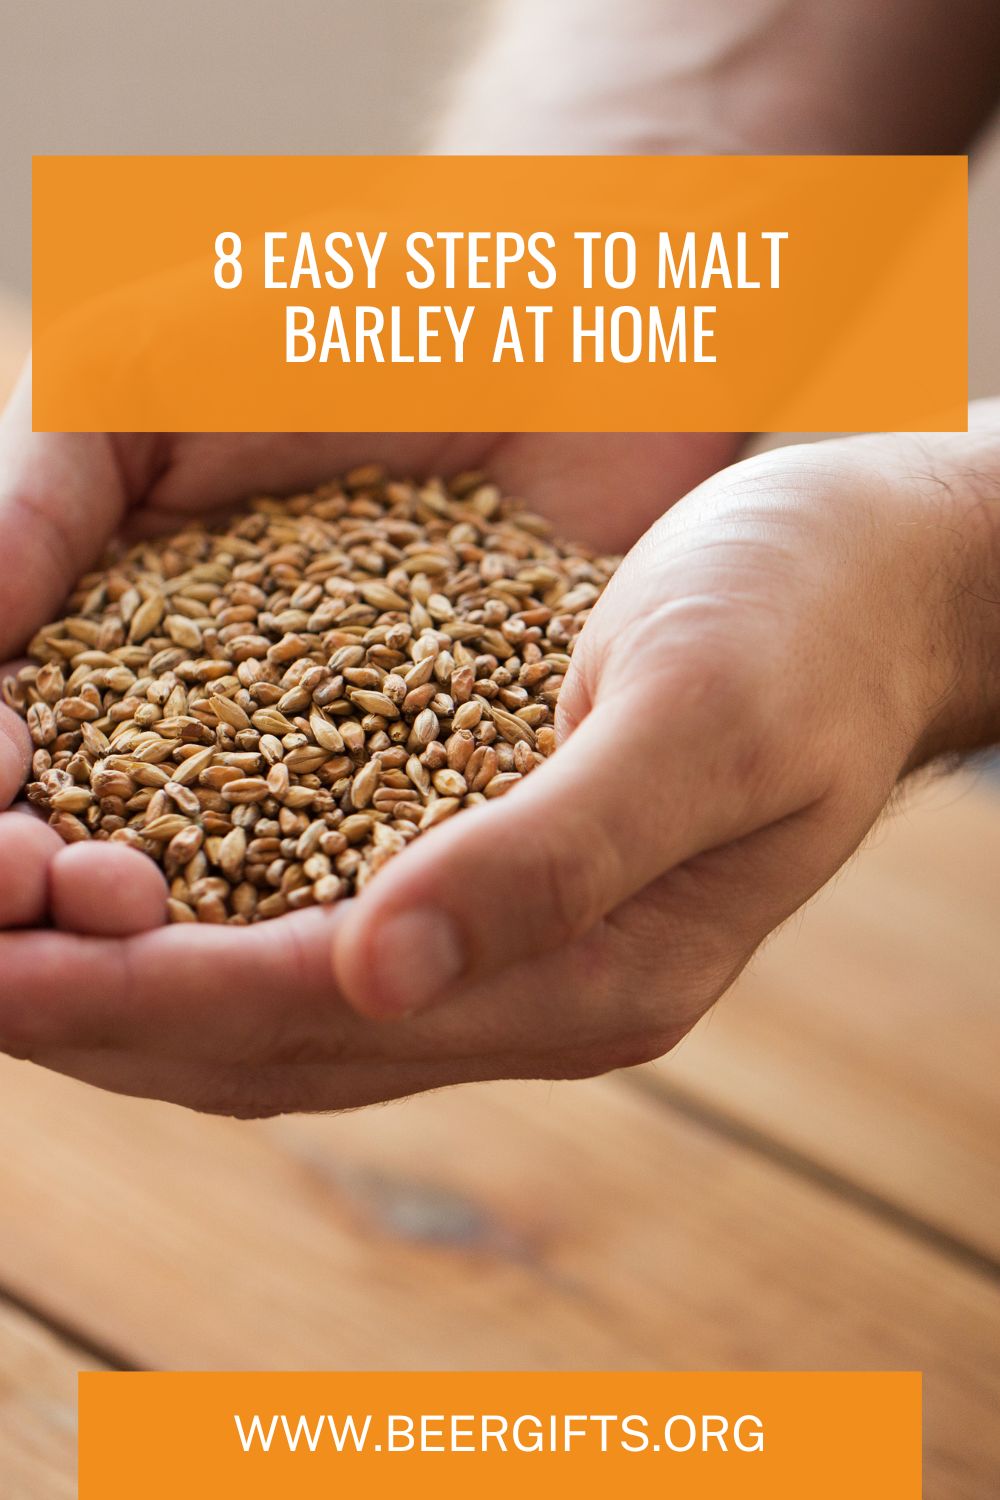 8 Easy Steps to Malt Barley at Home1